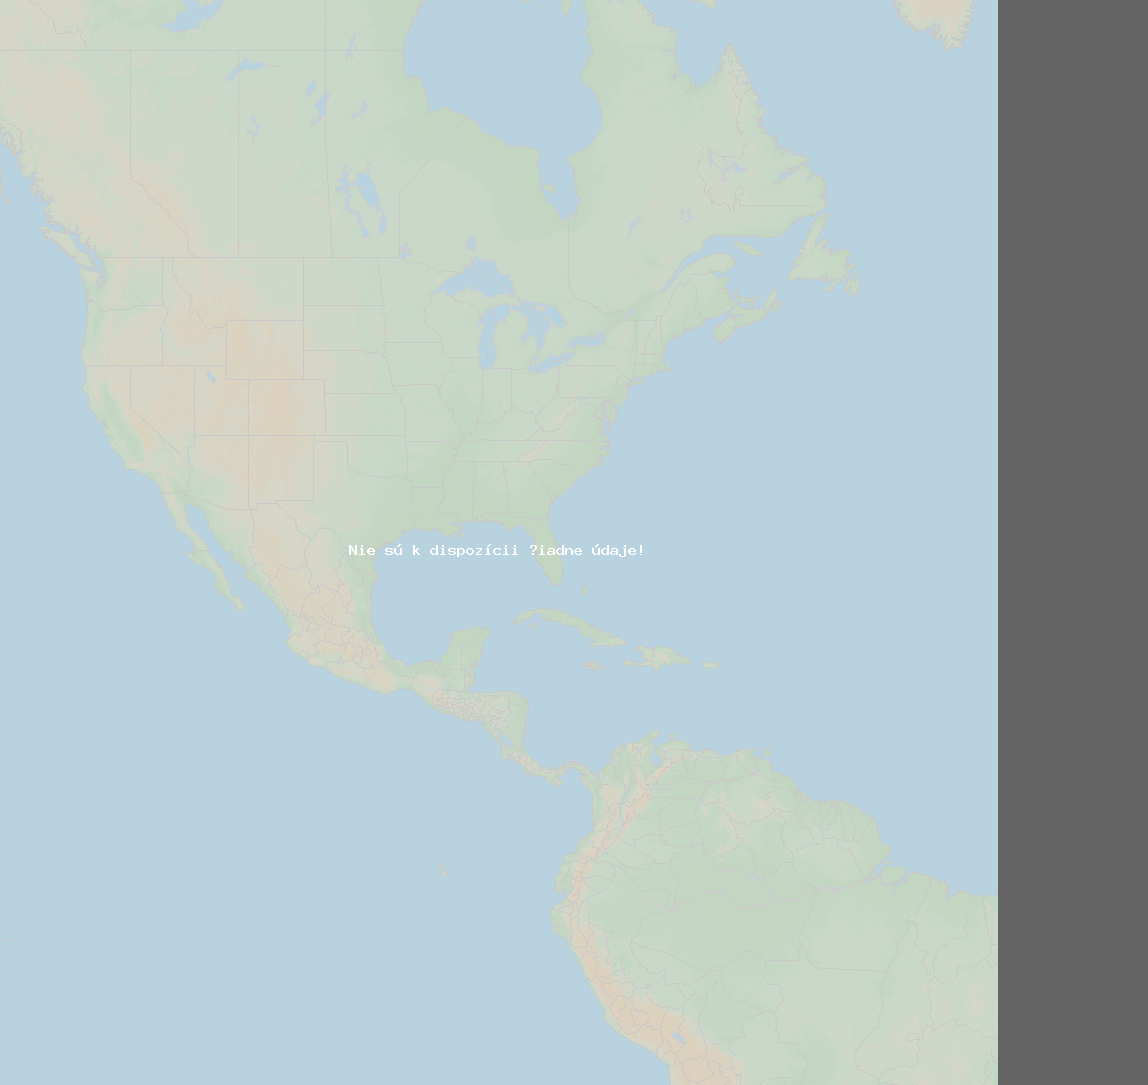 Pomer bleskov (Stanica Spring Hill) North America 2021 